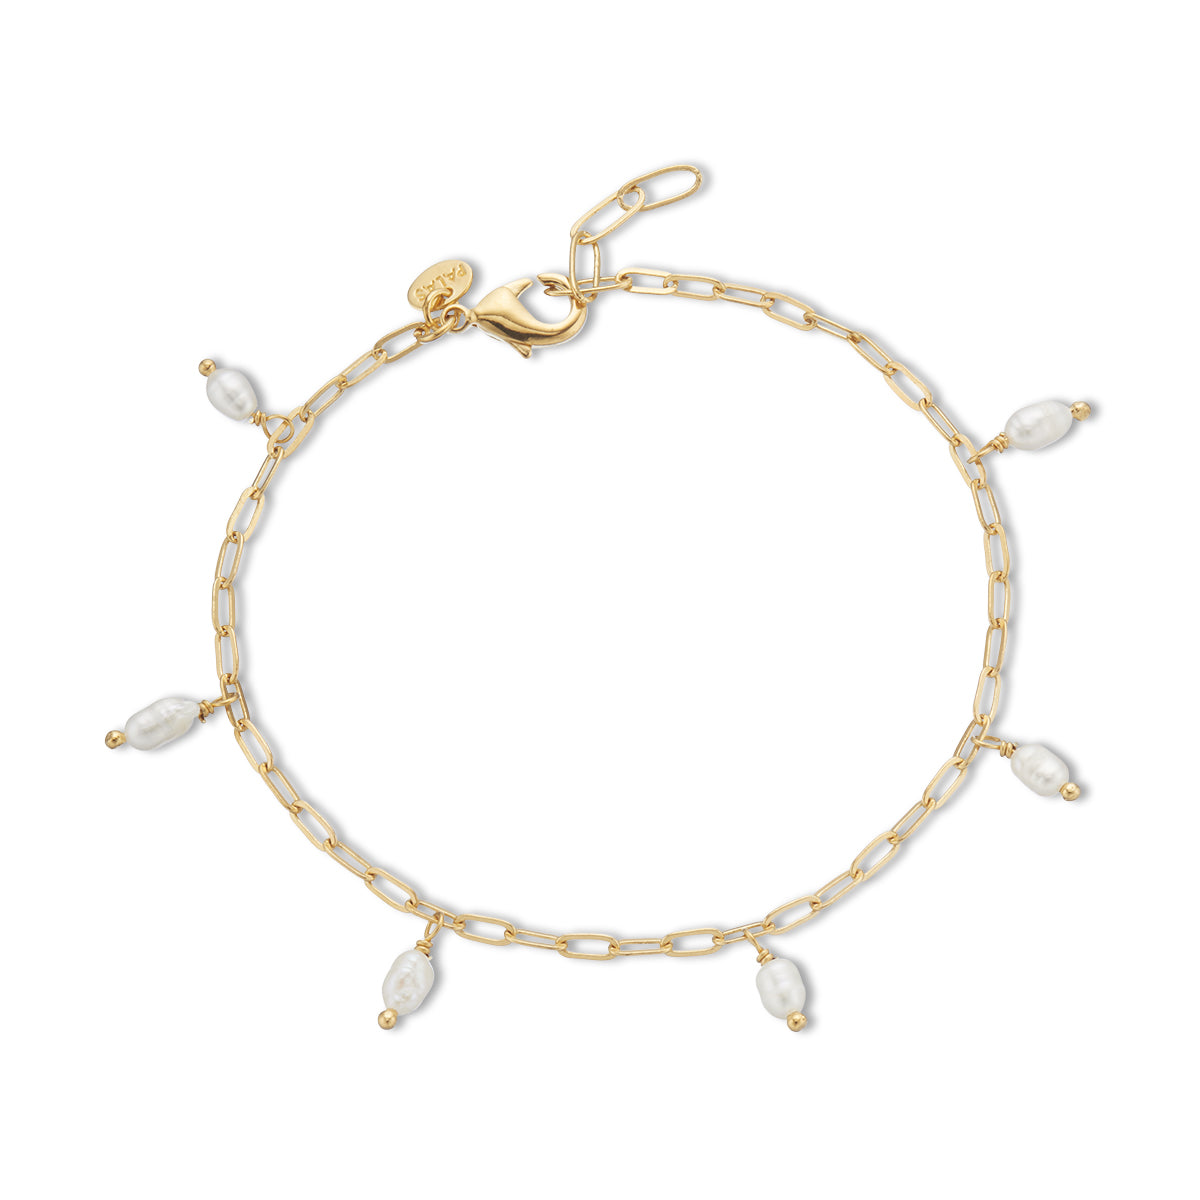 Antigua pearl bracelet 18k gold plated & adjustable